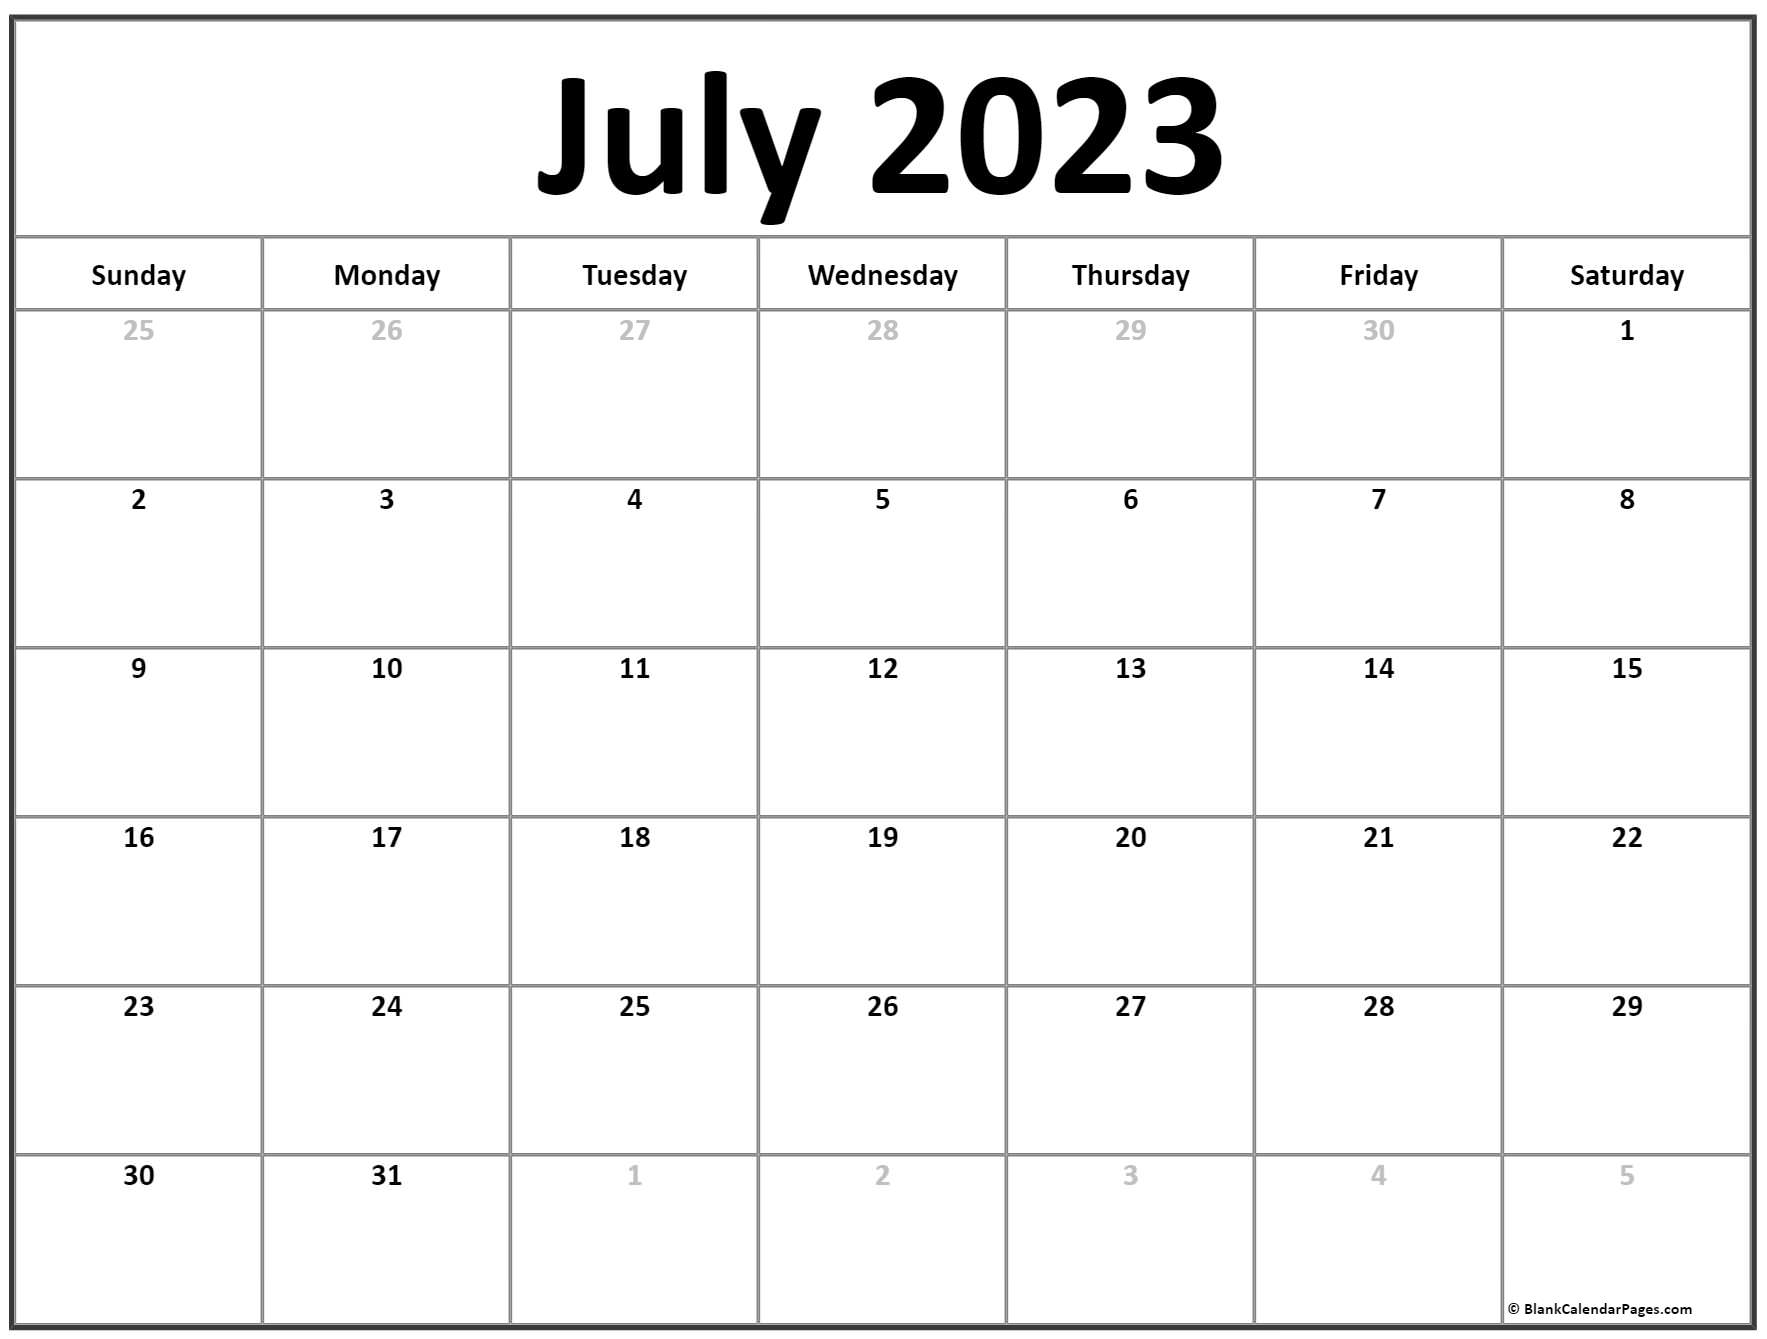 July 2023 Calendar | Free Printable Calendar